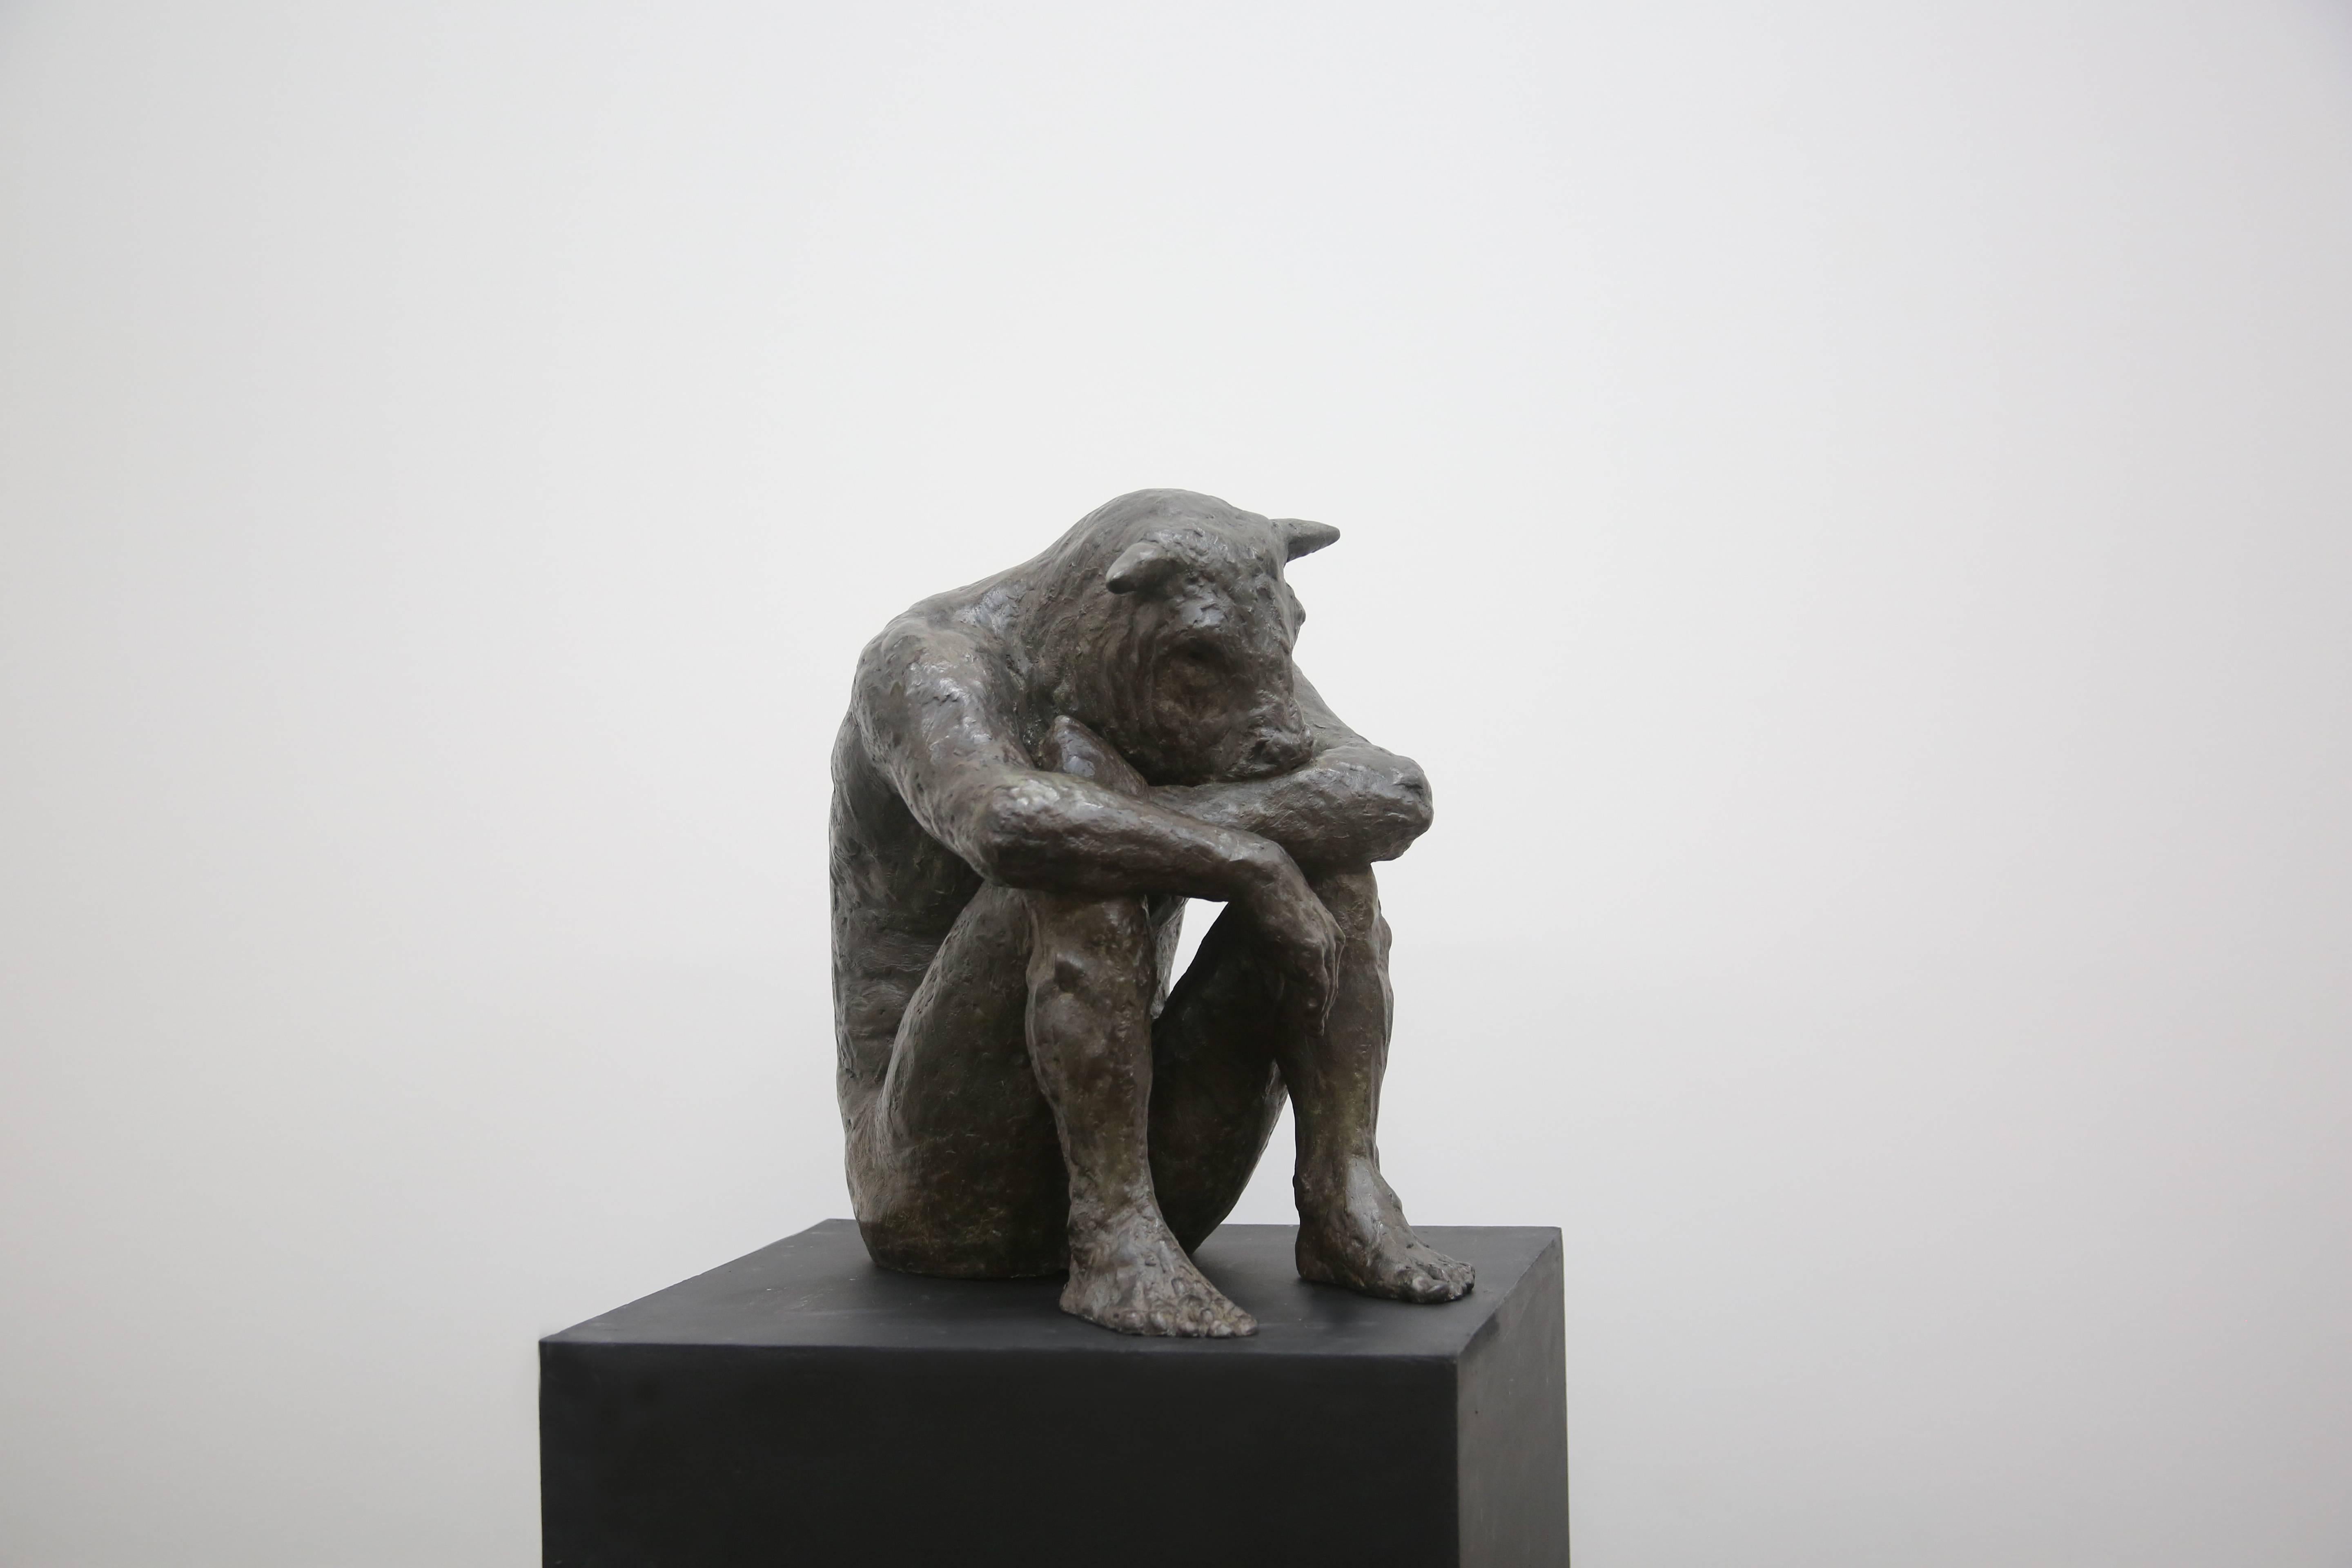 Beth Carter Figurative Sculpture - Sitting Minotaur, bronze sculpture